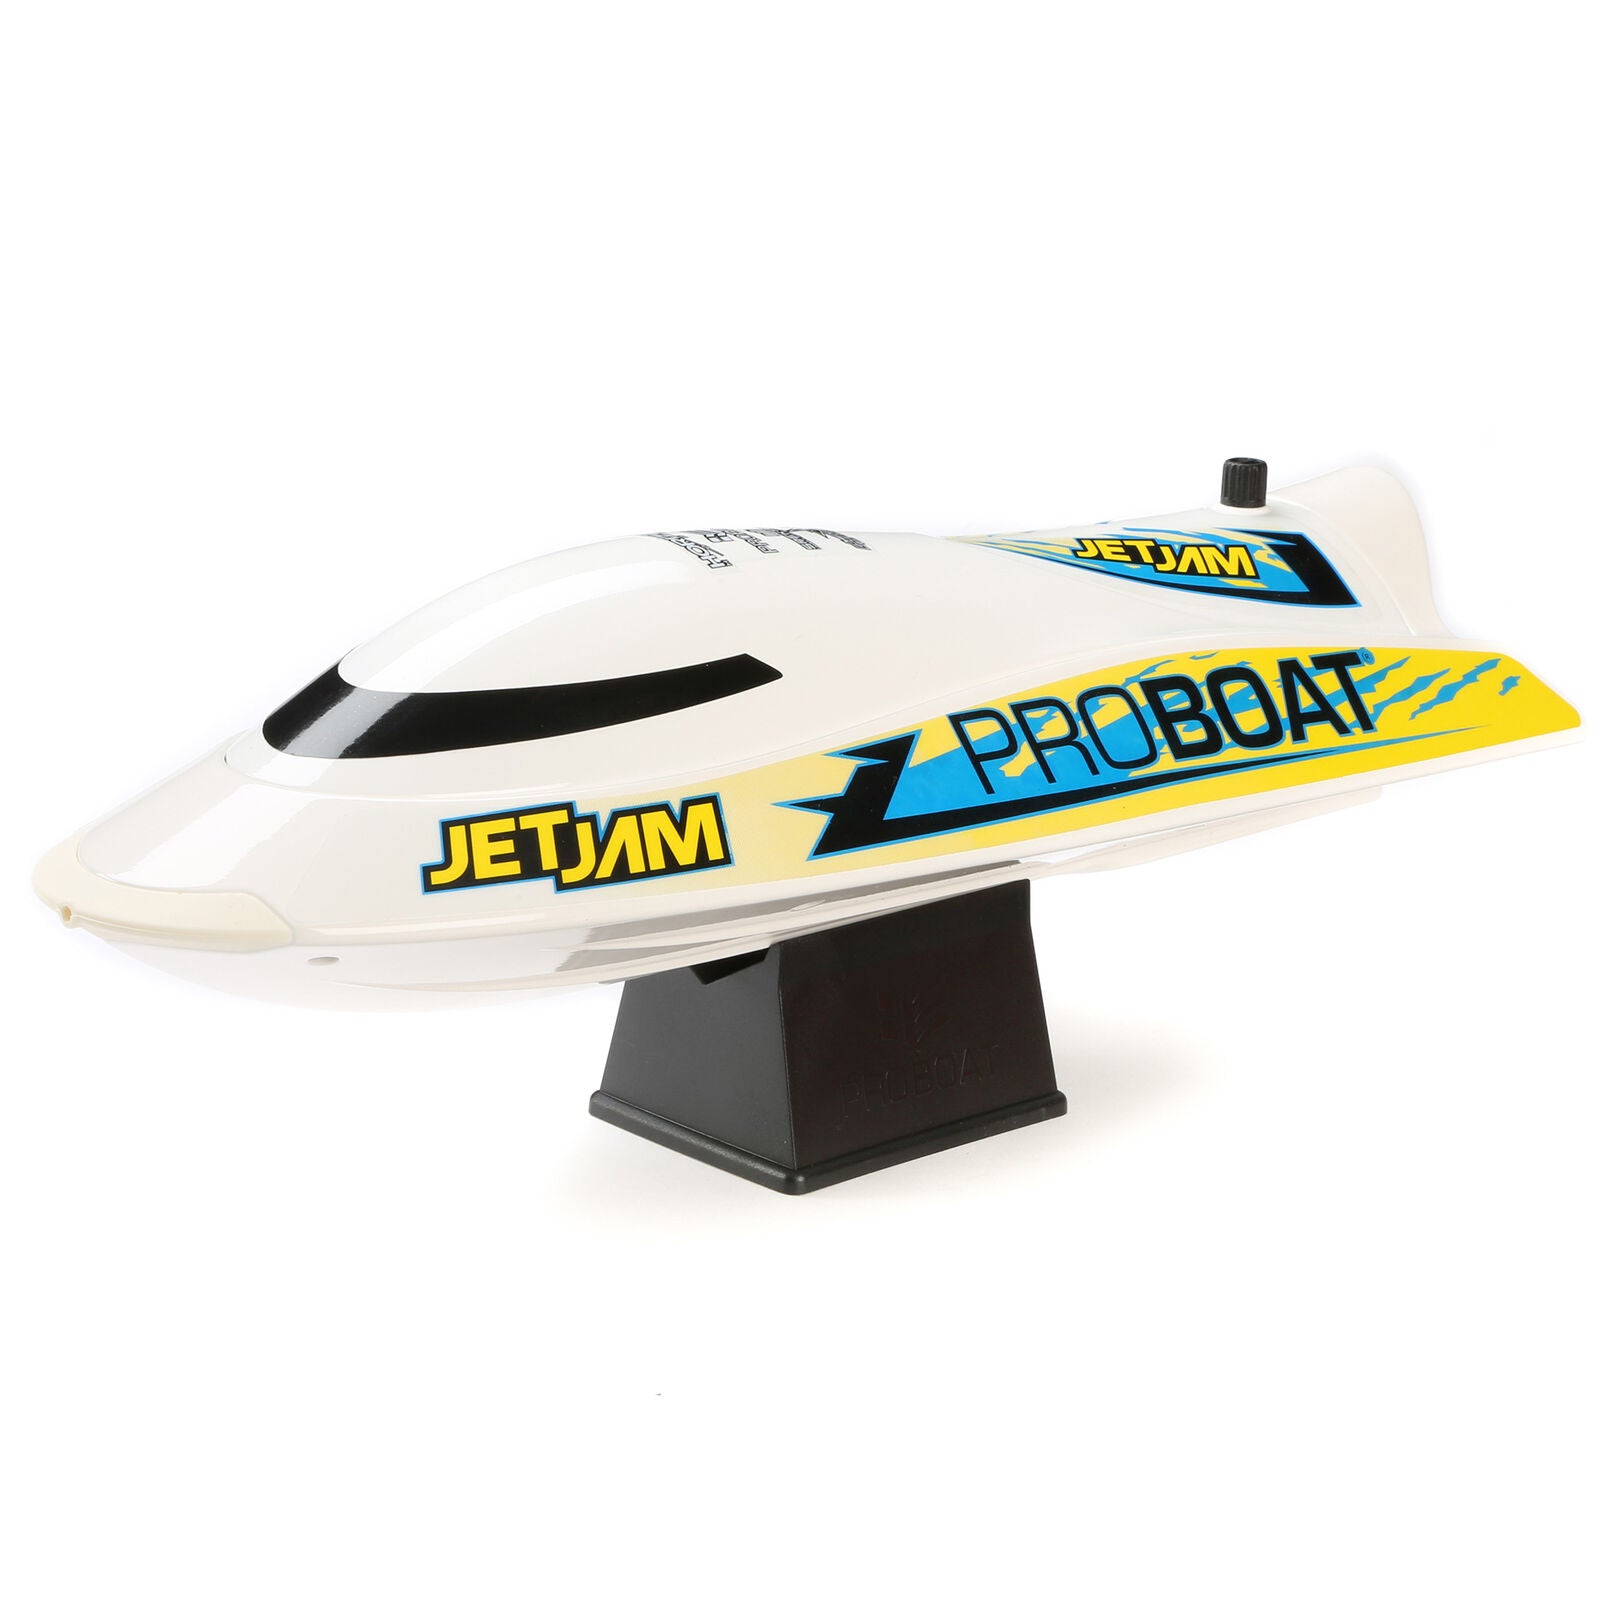 Pro Boat Jet Jam V2 12" Self-Righting Pool Racer Brushed RTR